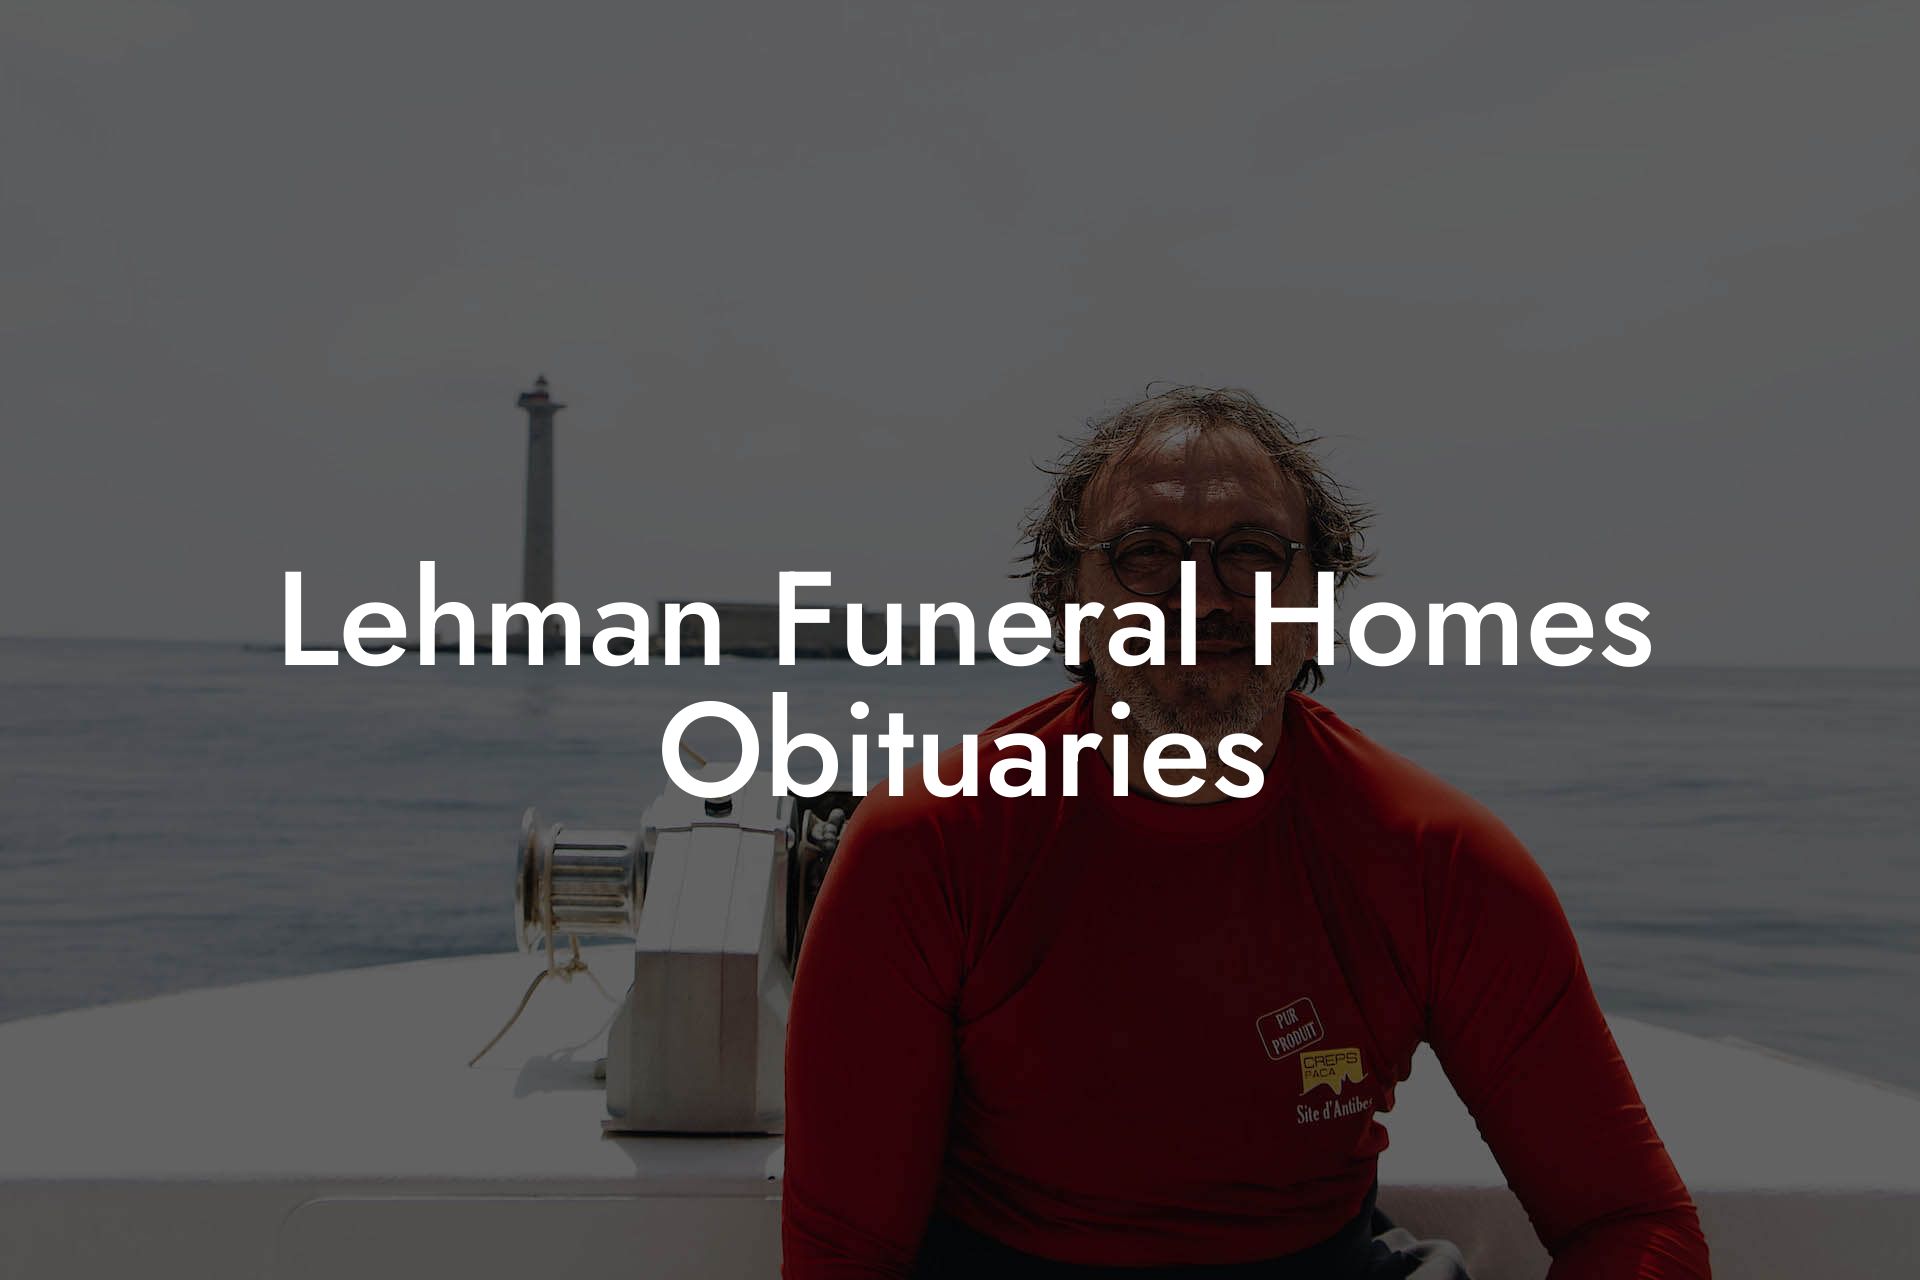 Lehman Funeral Homes Obituaries